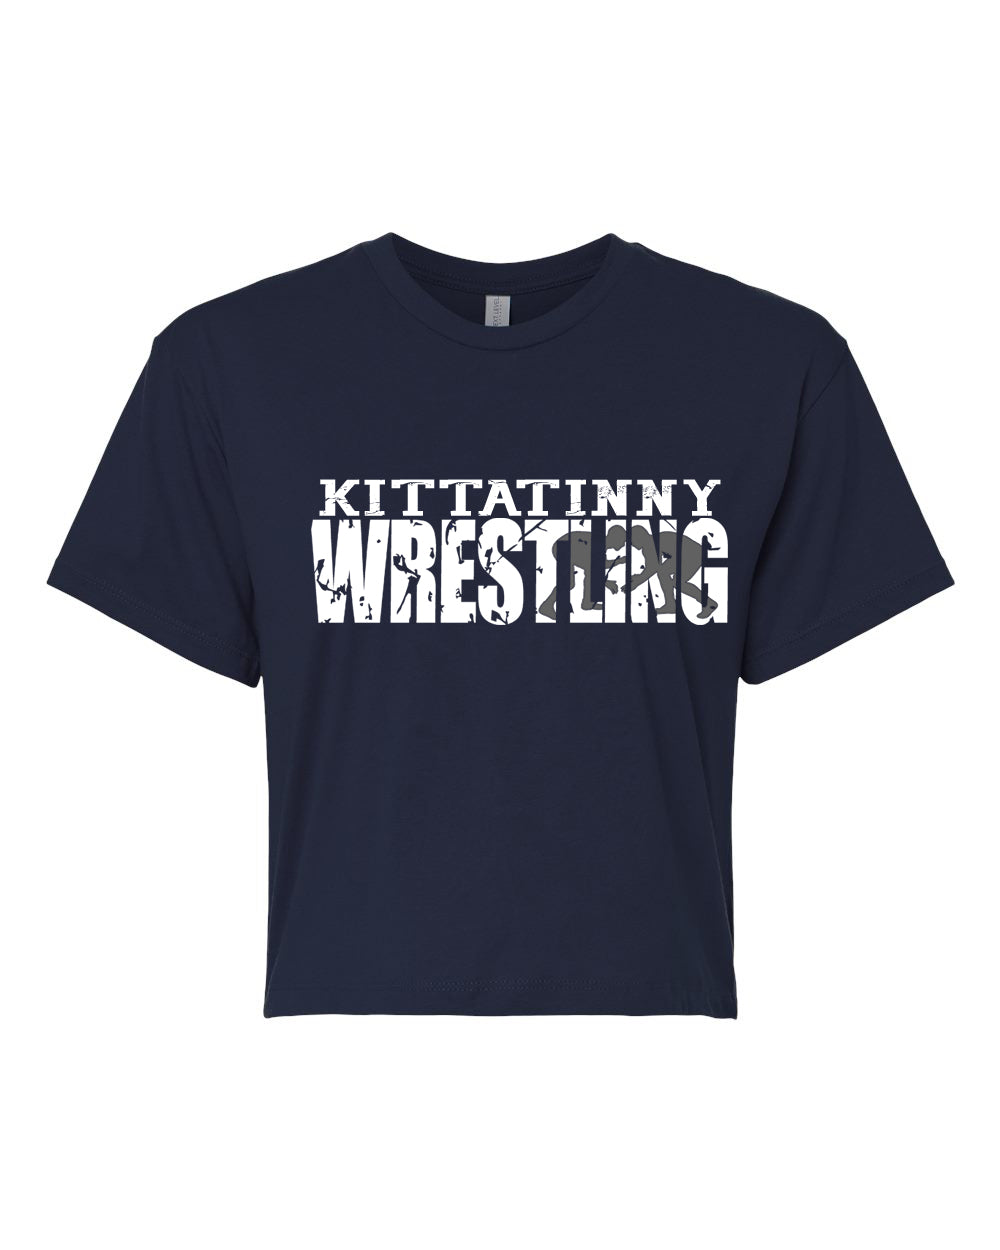 Kittatinny Wrestling design 2 Crop Top